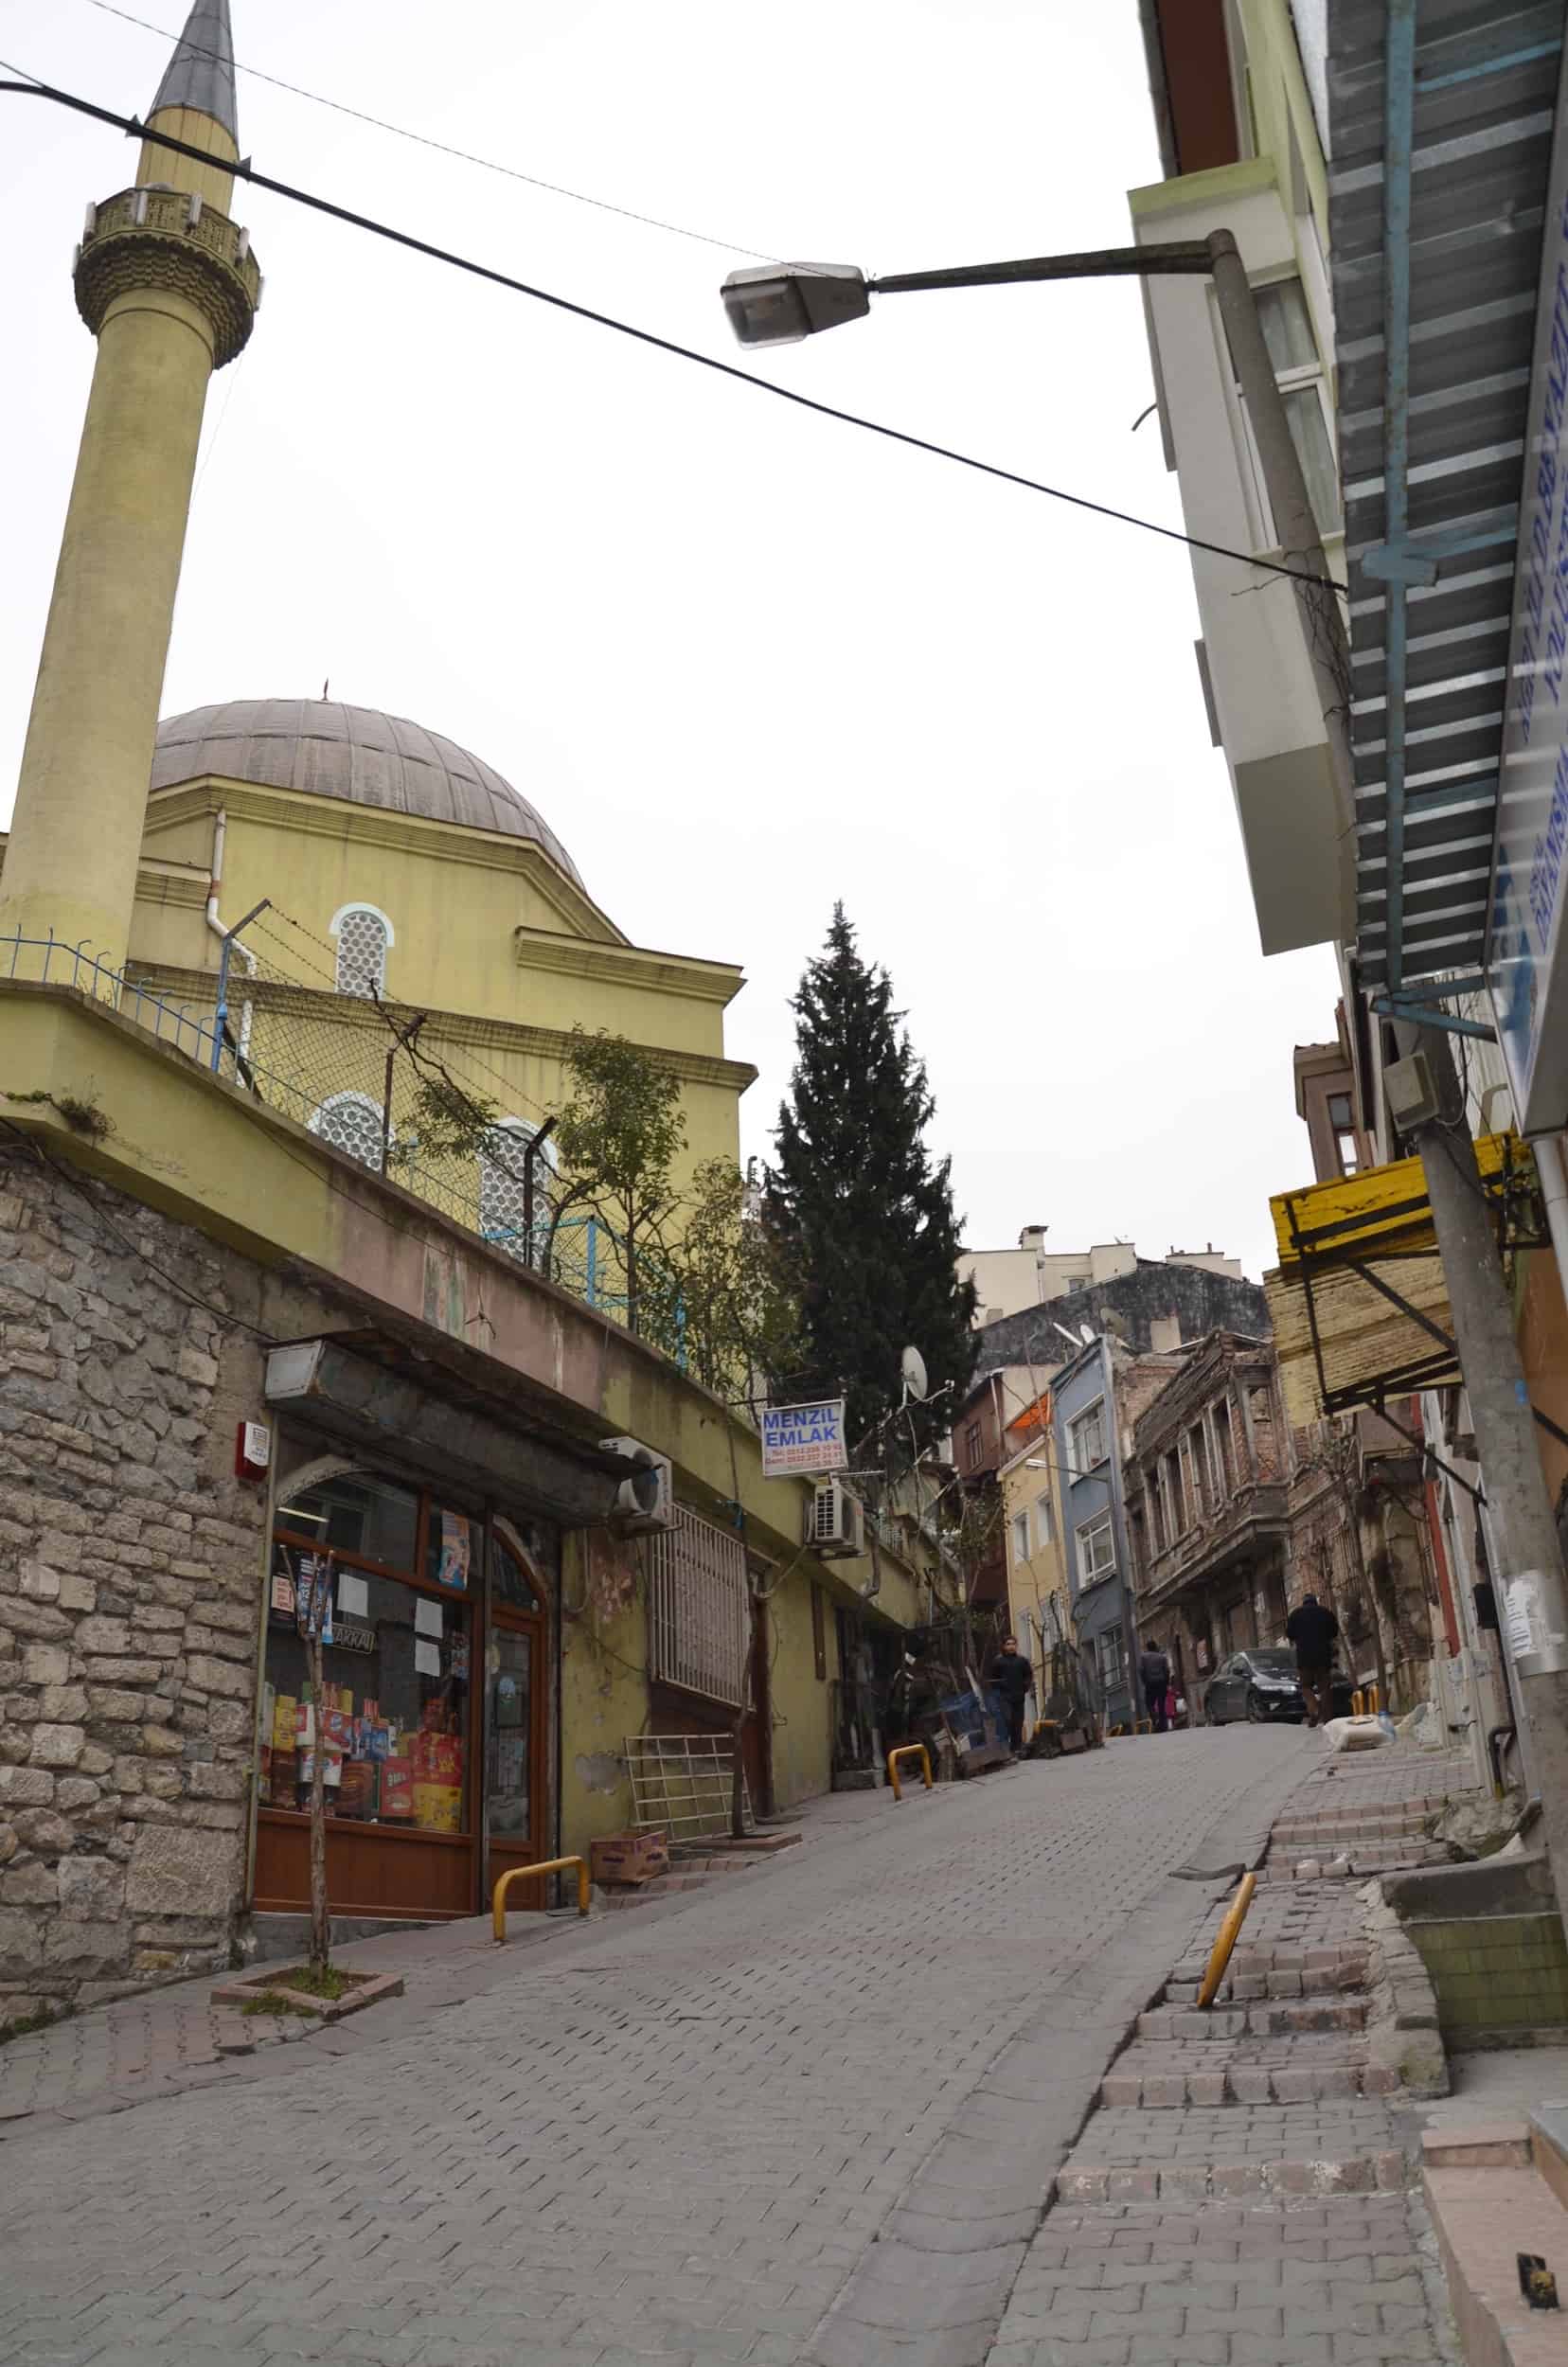 Aynalı Çeşme Street in Tarlabaşı, Istanbul, Turkey